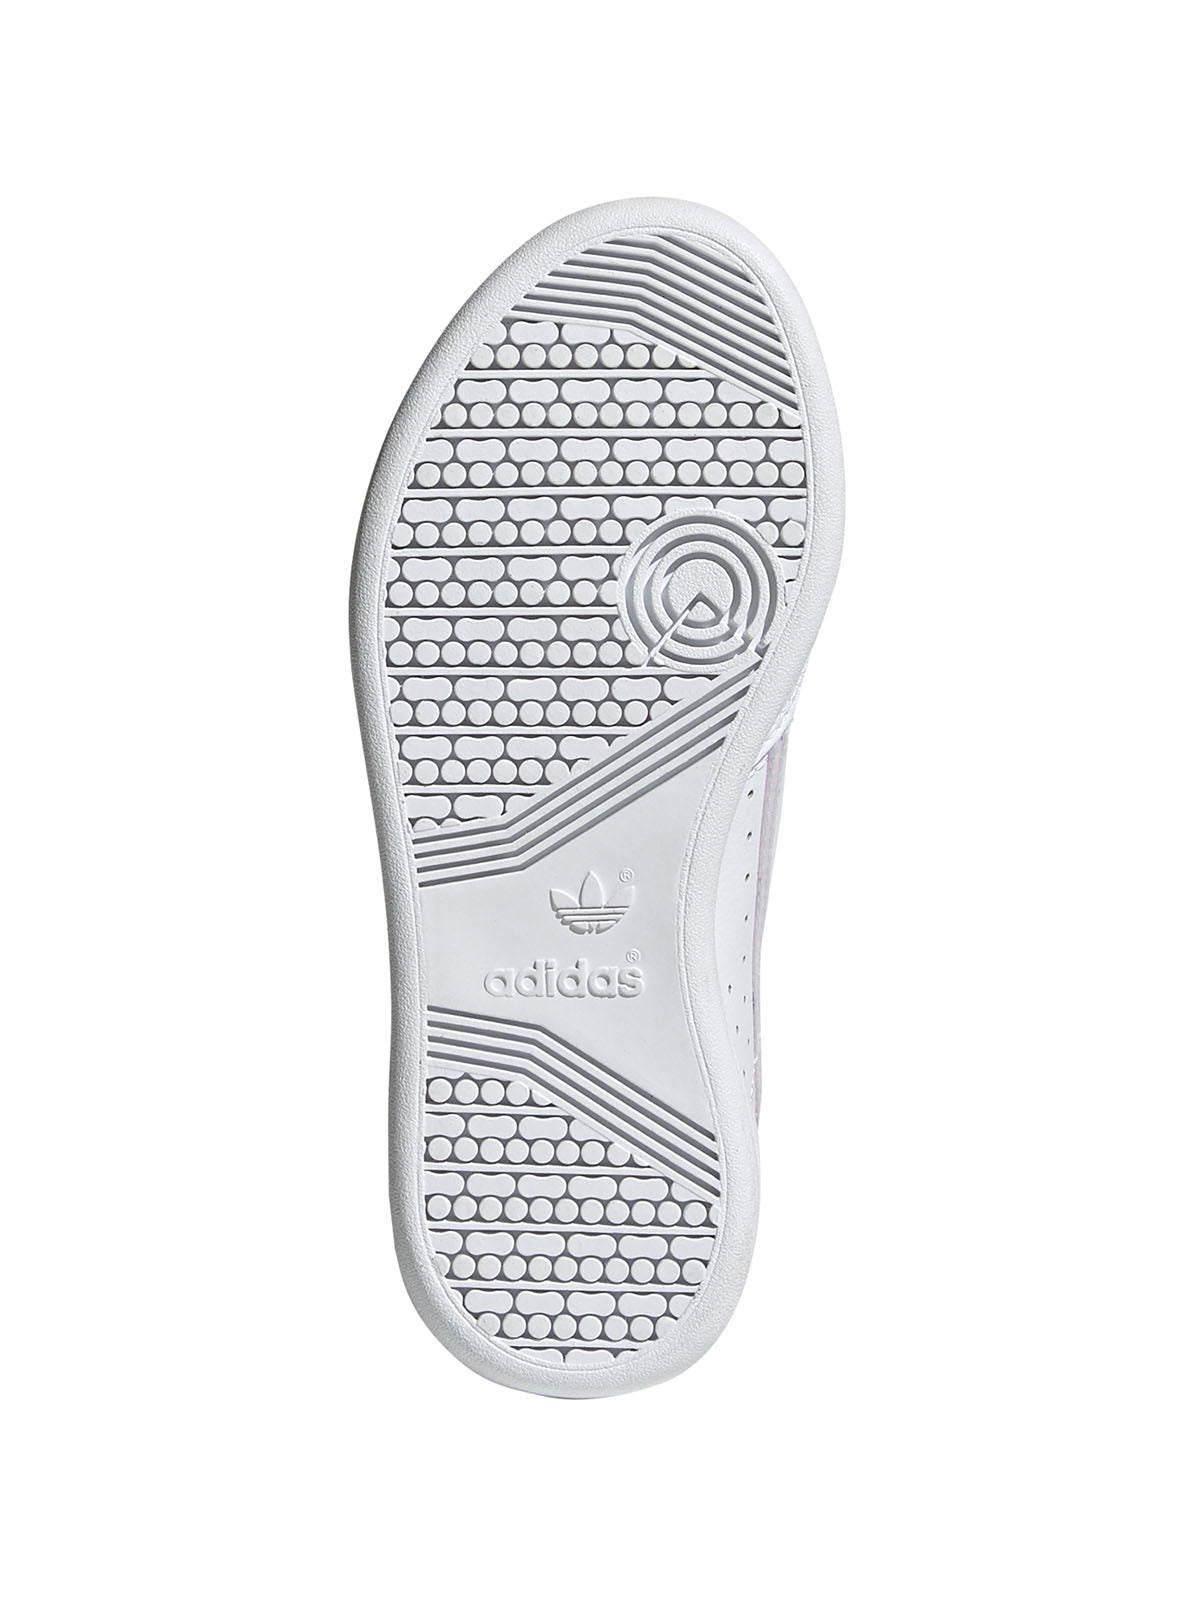 Sneaker Bambini Unisex Adidas - Adidas Continental 80 C - Bianco